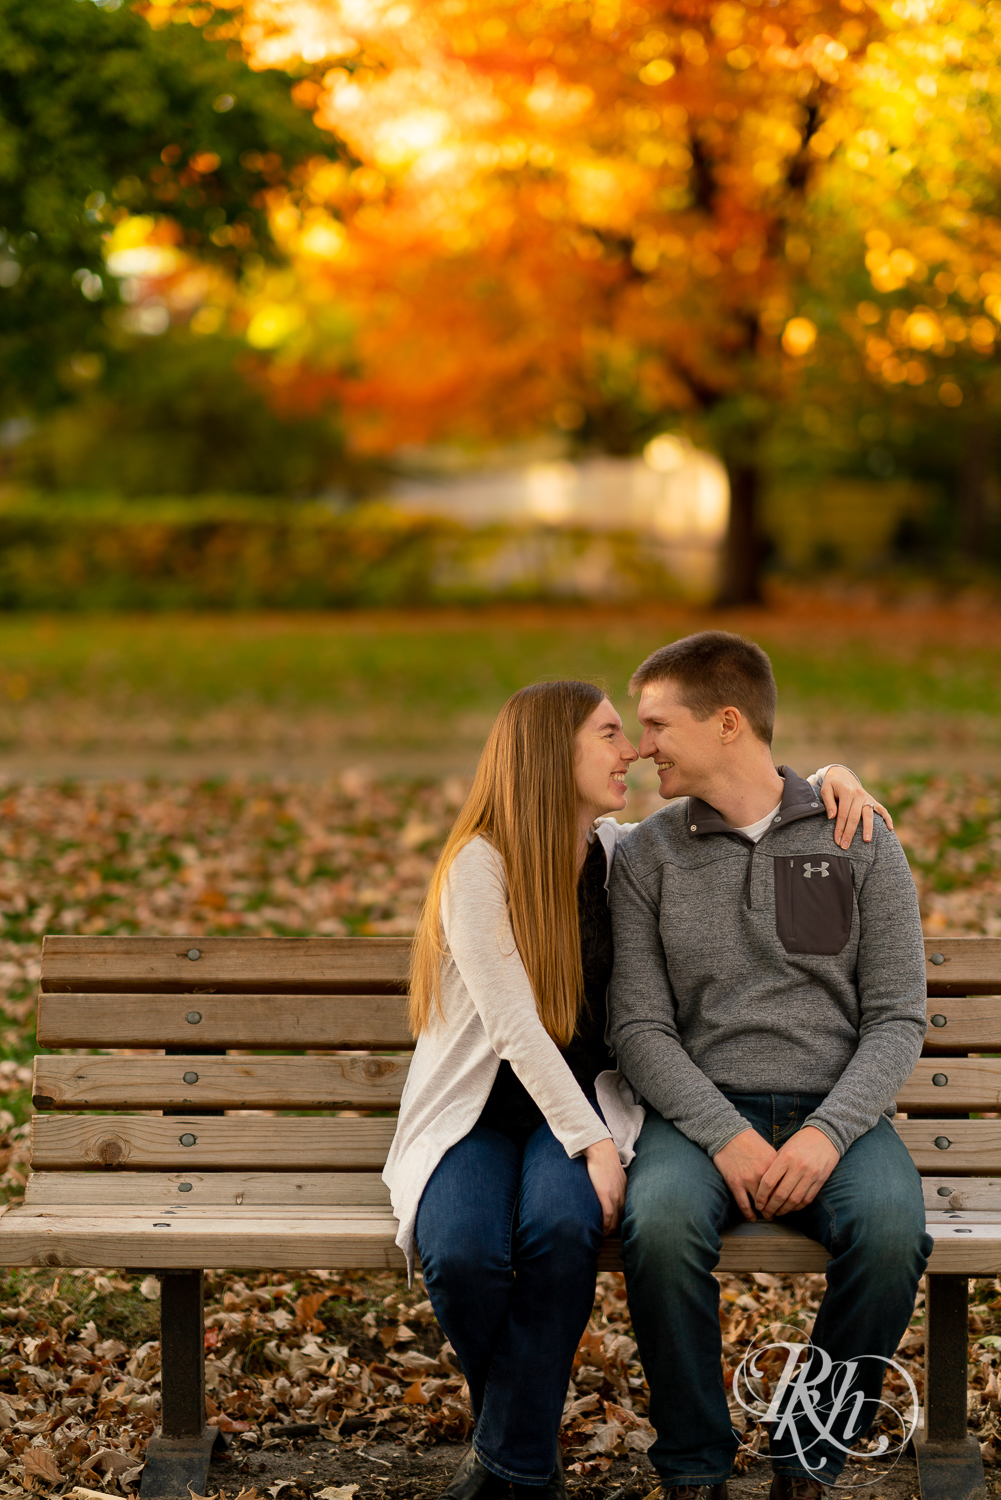 Man and woman kissing on bench during sunset at Matoska Park in White Bear Lake, Minnesota. 